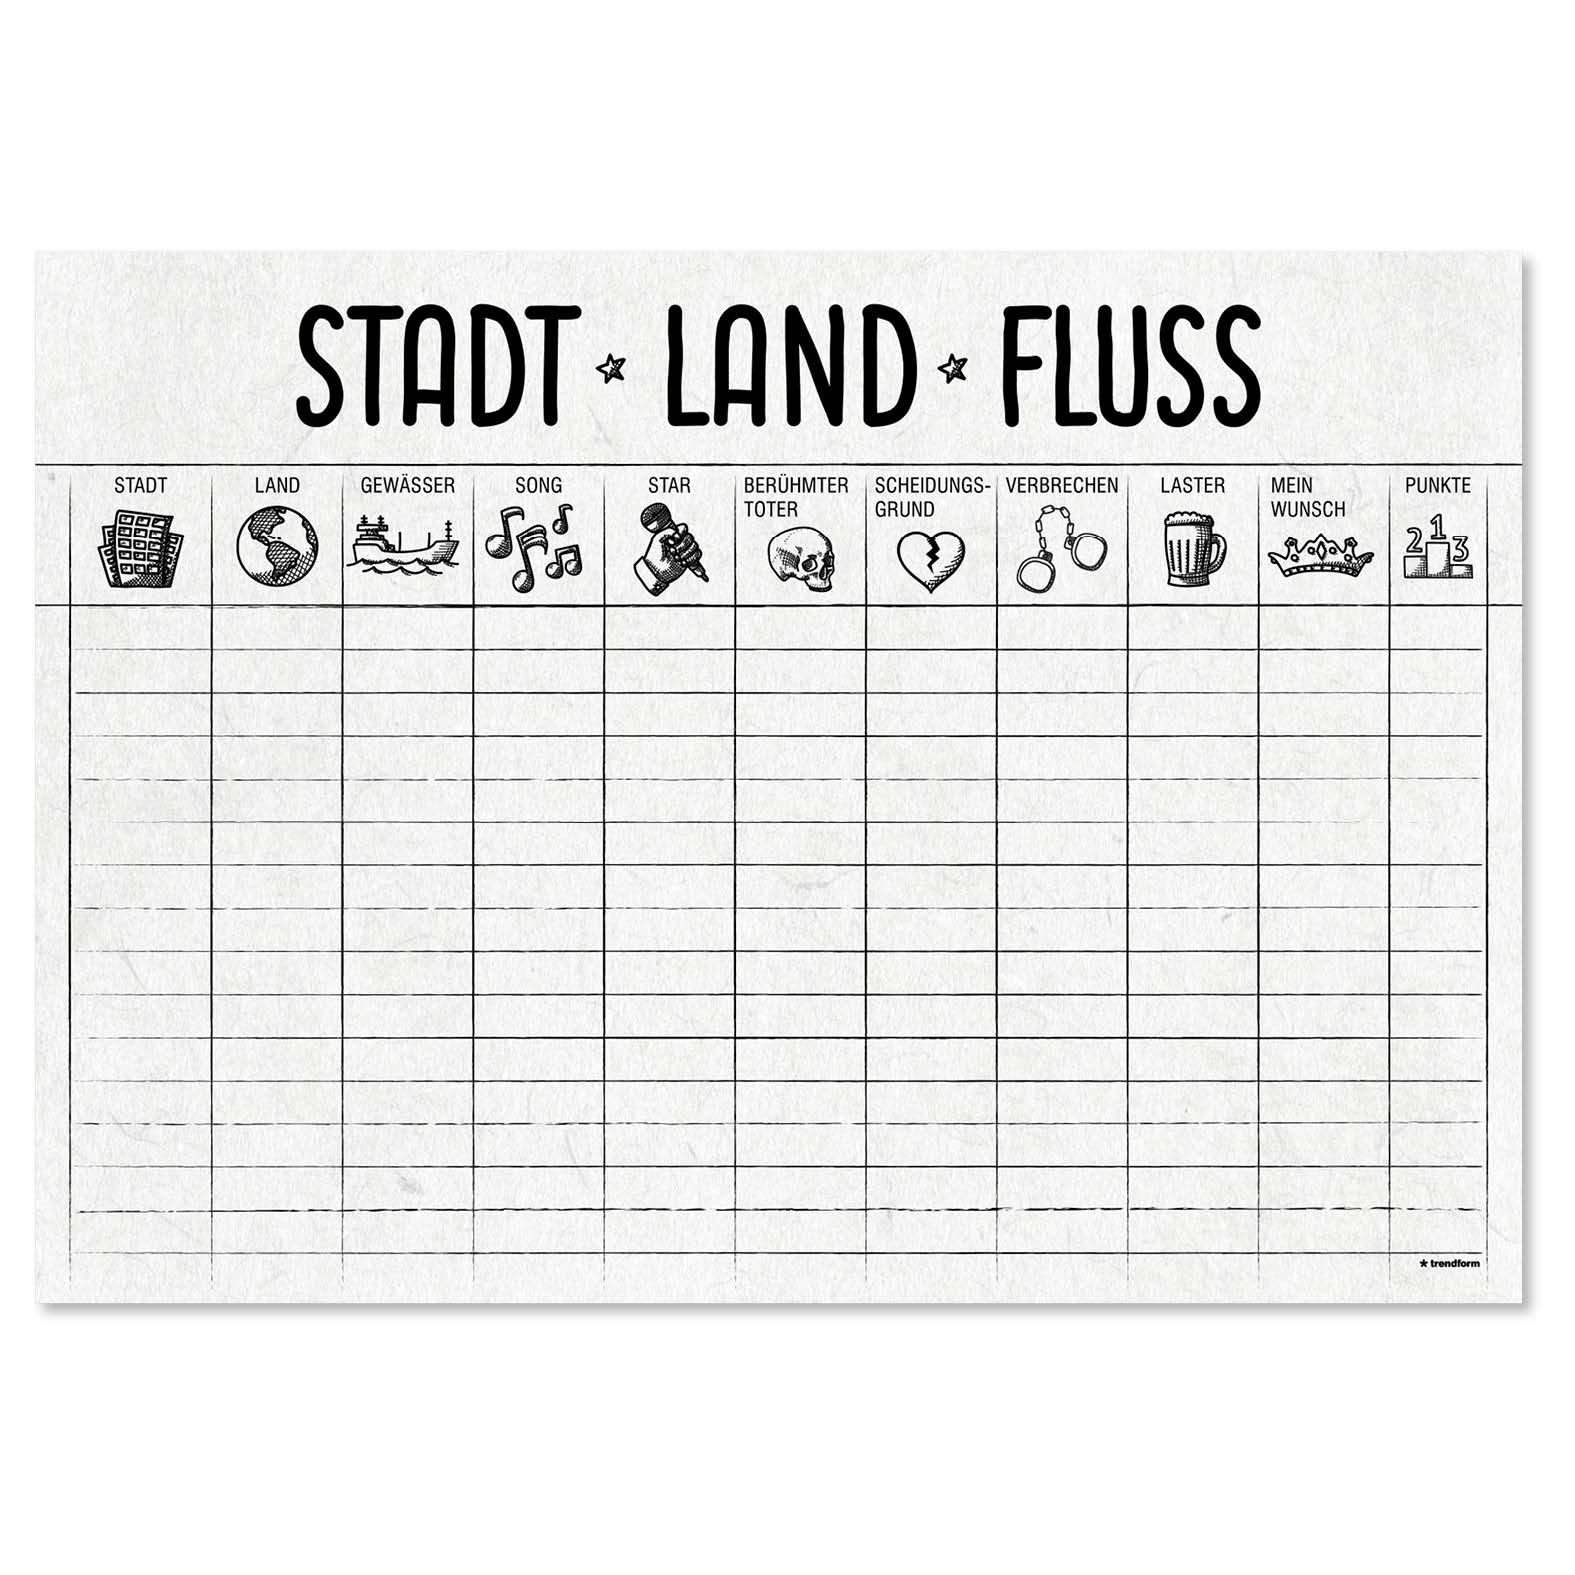 Papiertischset STADT-LAND-FLUSS Block mit 50 Blatt